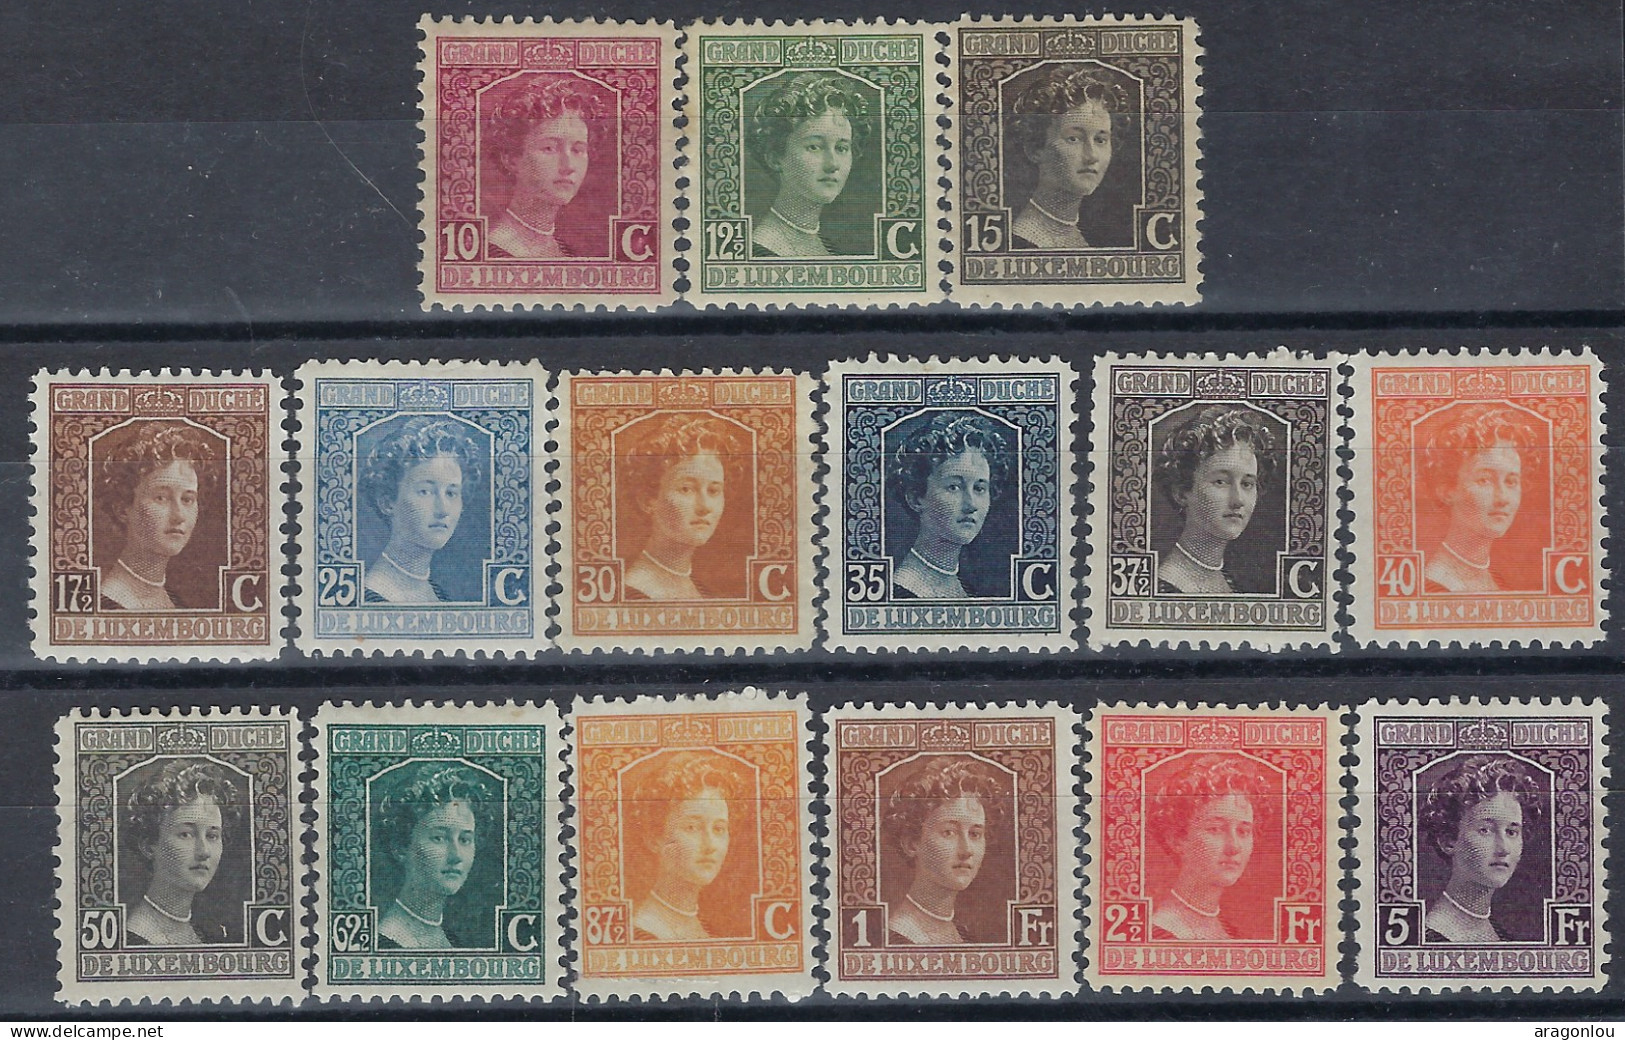 Luxembourg - Luxemburg - Timbre  1914   Marie-Adélaïde   Série   * - 1914-24 Marie-Adélaïde